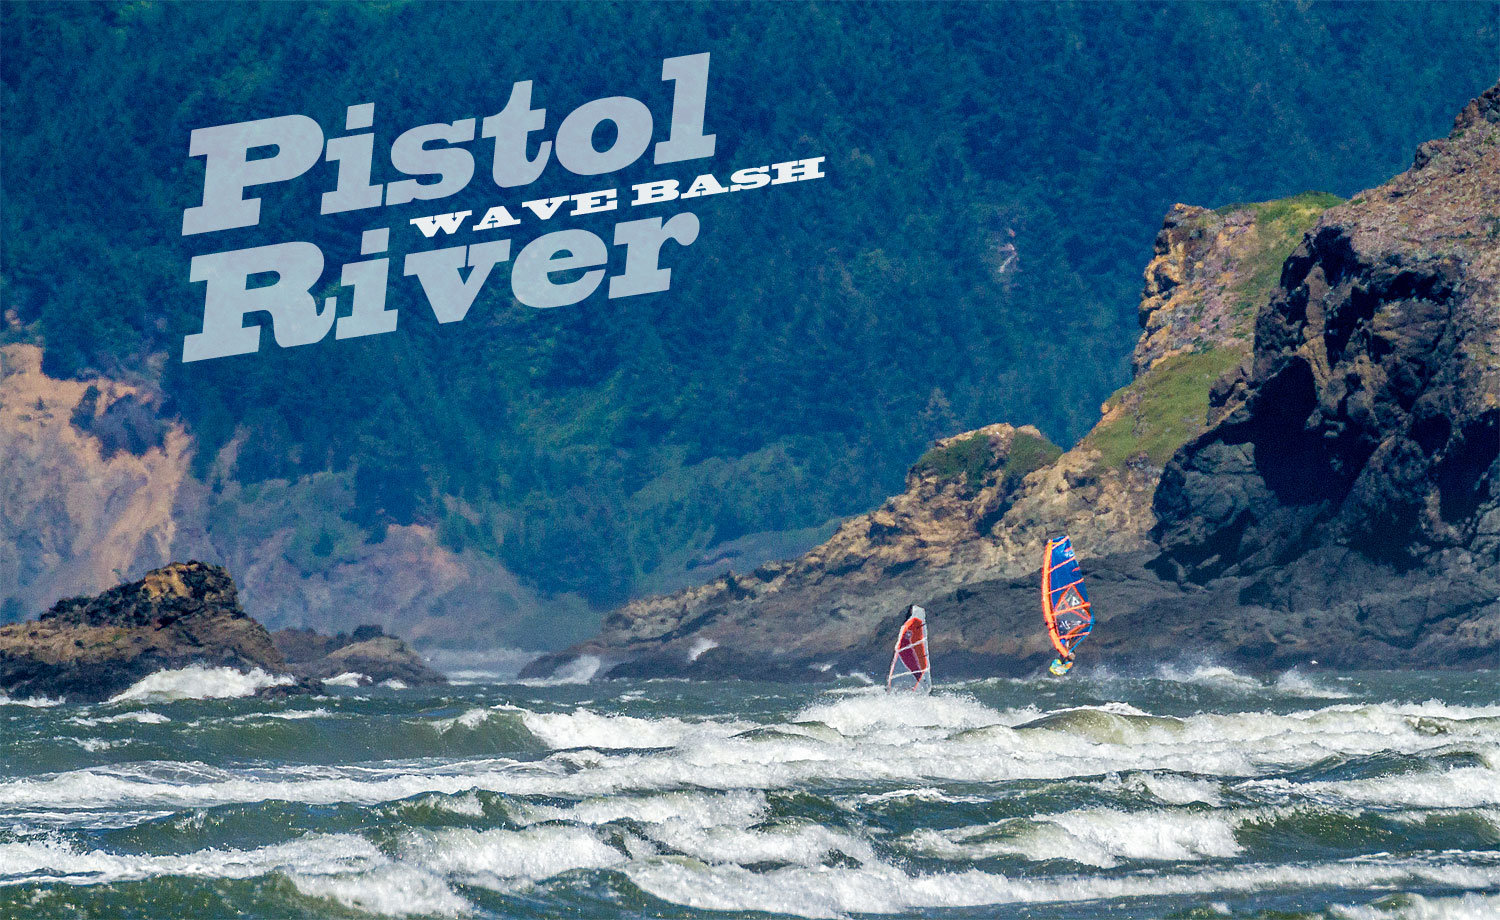 AWT Pistol River 2015